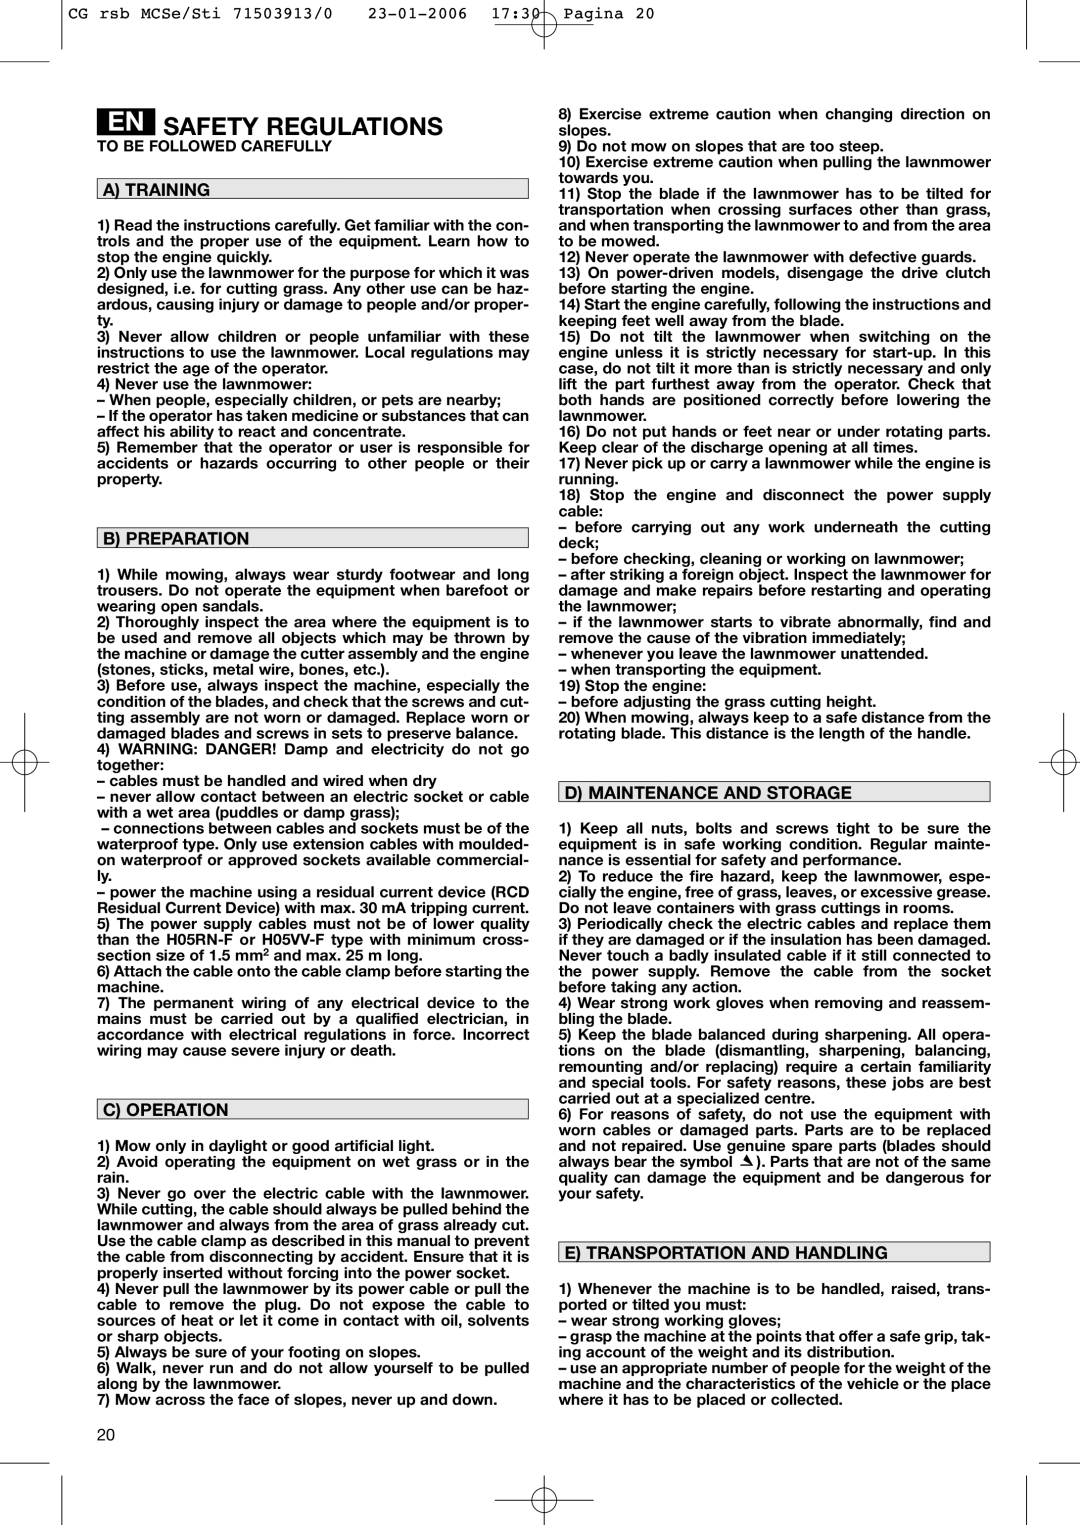 Stiga 50 EL manual En Safety Regulations, CG rsb MCSe/Sti 71503913/0, 23-01-2006 1730 Pagina, A Training, B Preparation 